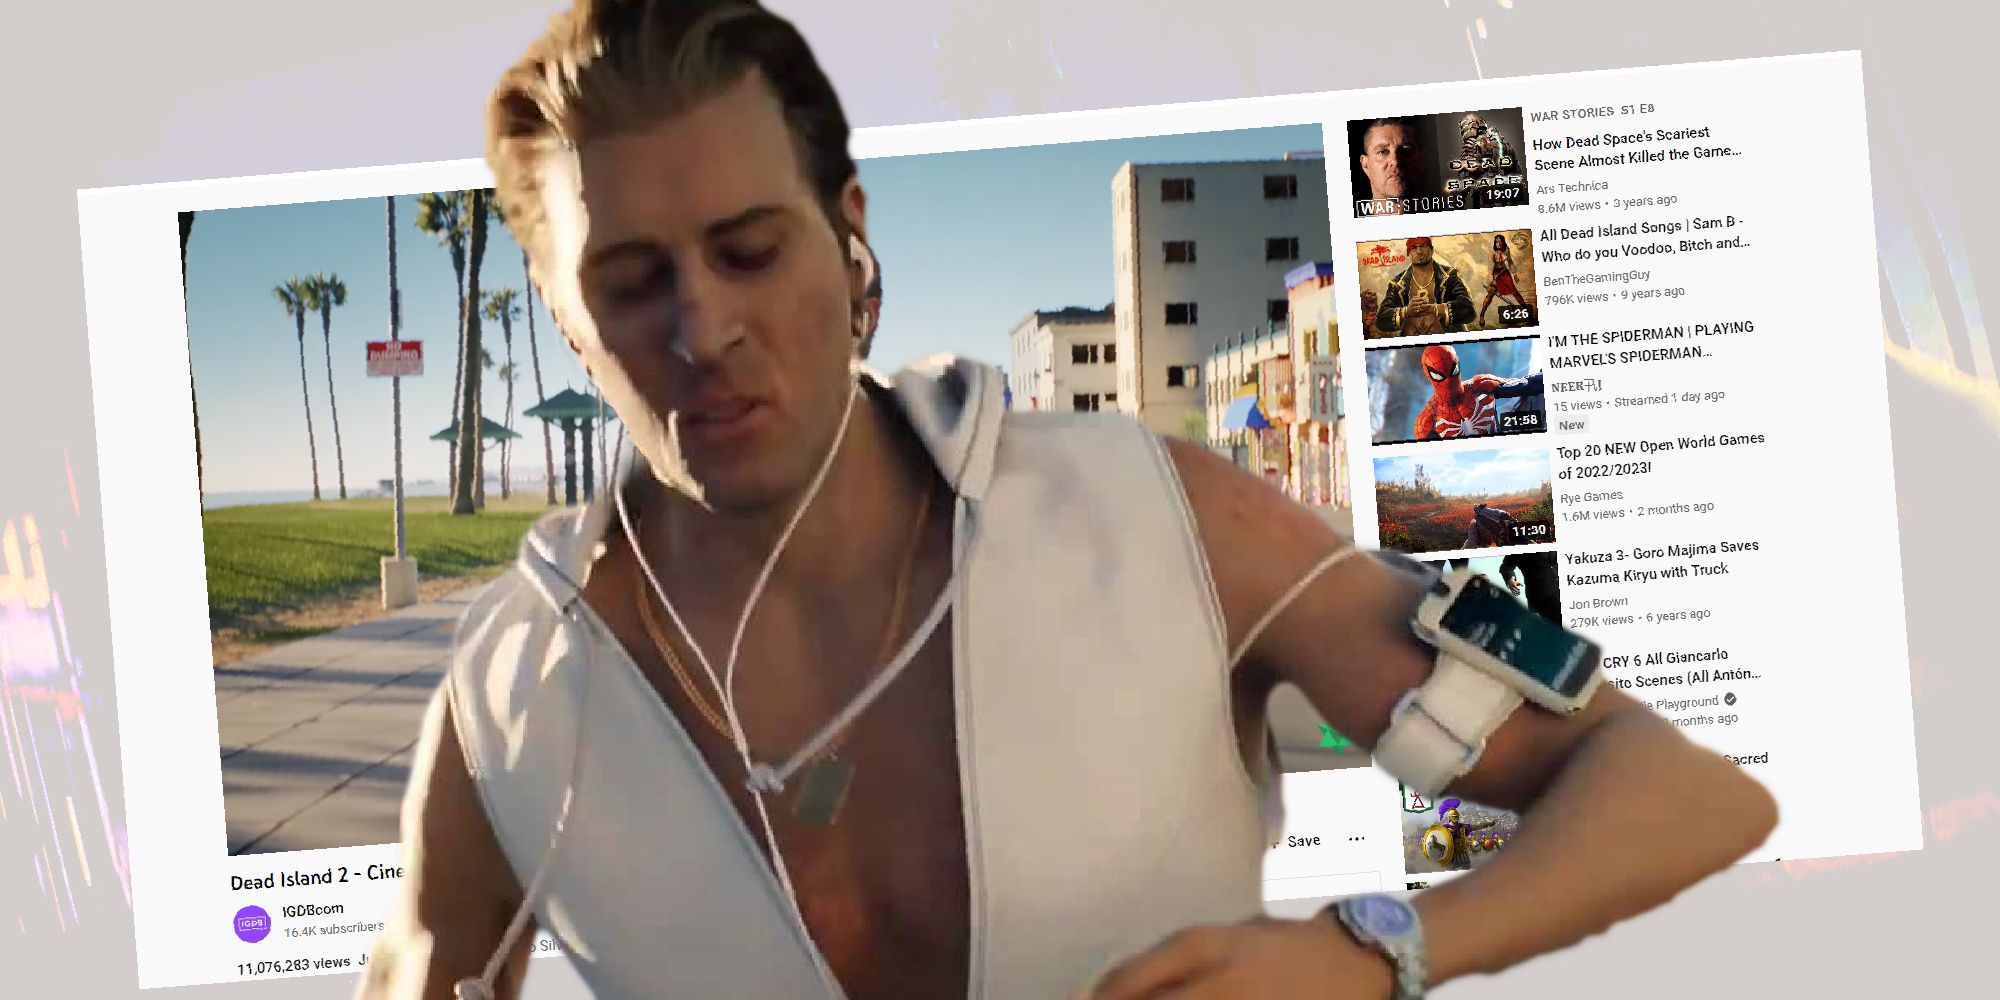 Dead Island 2 jogging guy against YouTube backdrop